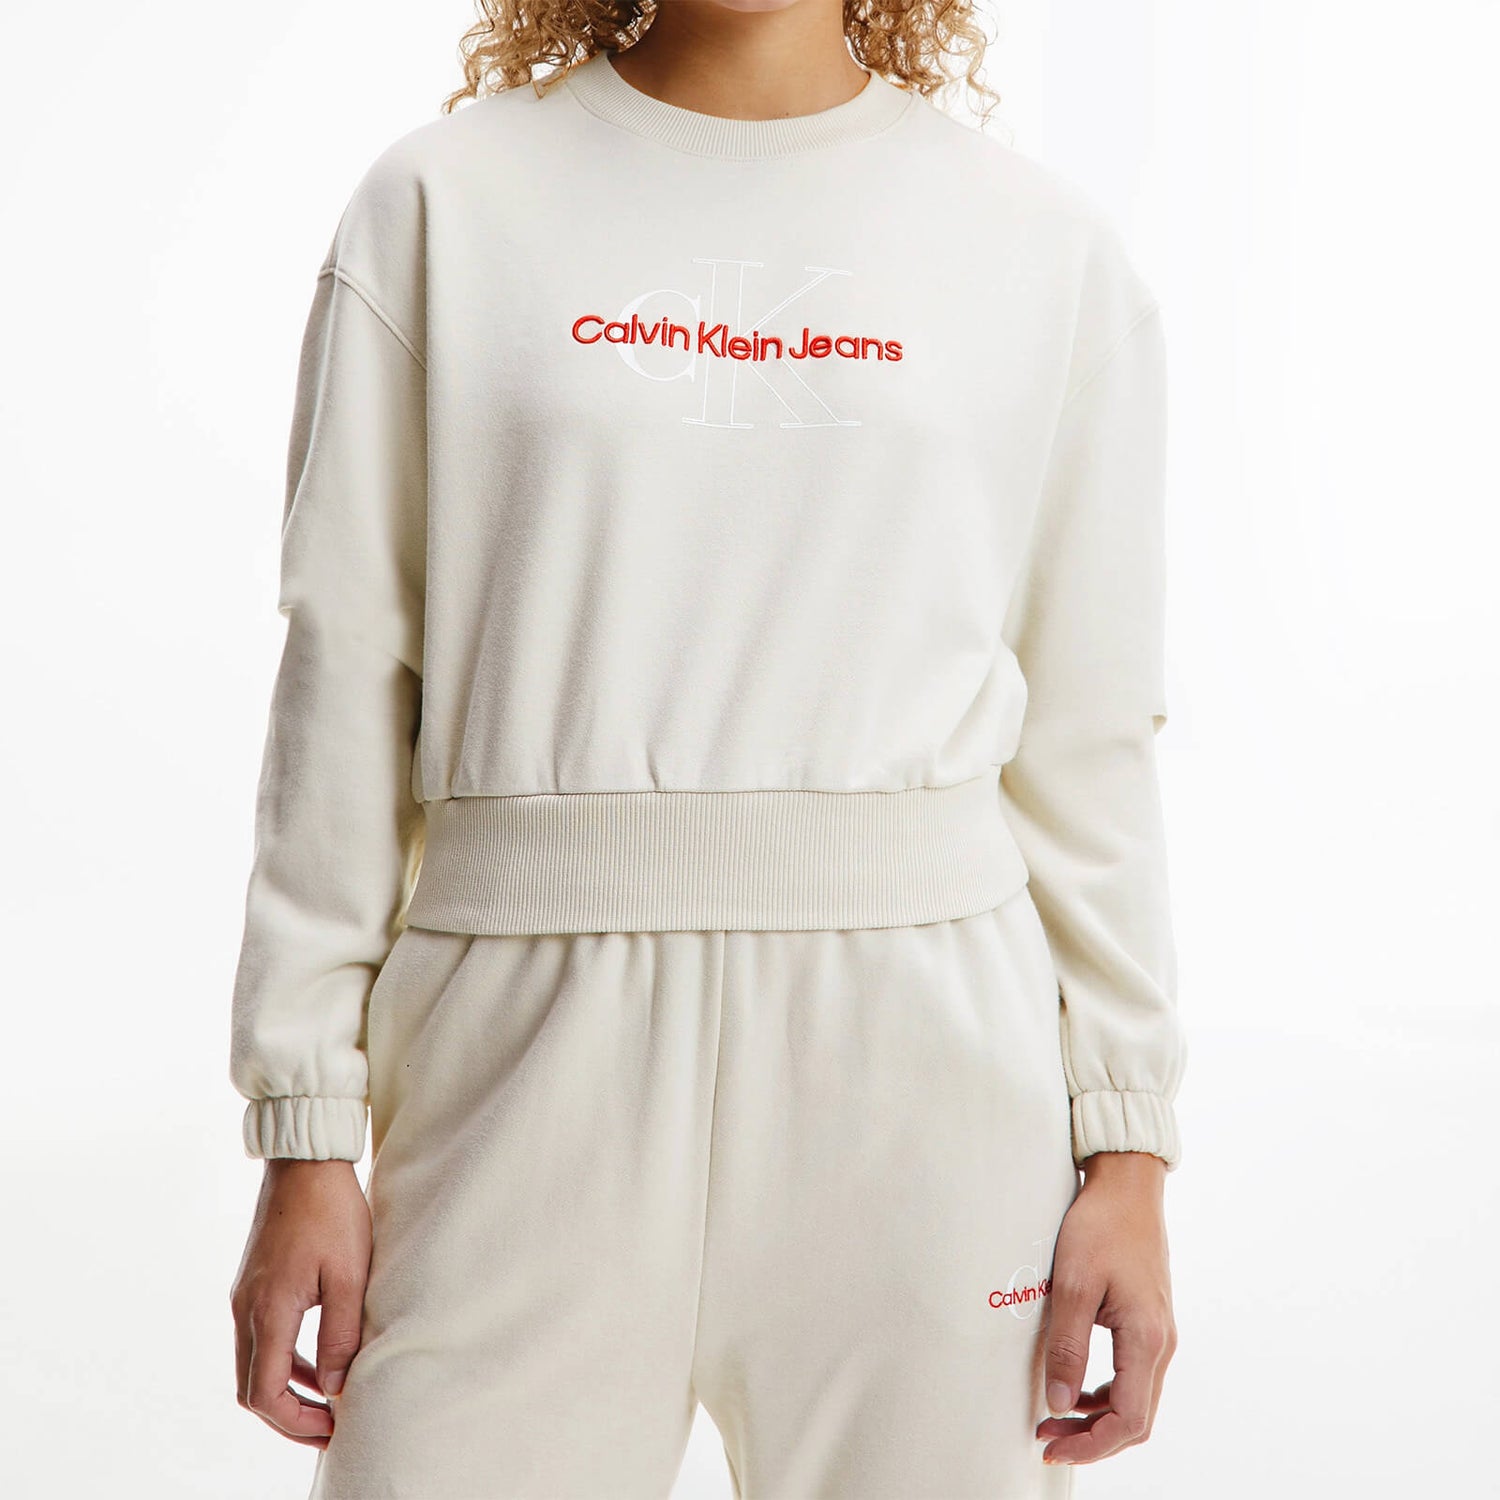 Calvin Klein Jeans Women's Two Tone Monogram Crop Crew Neck Sweatshirt - Eggshell - M